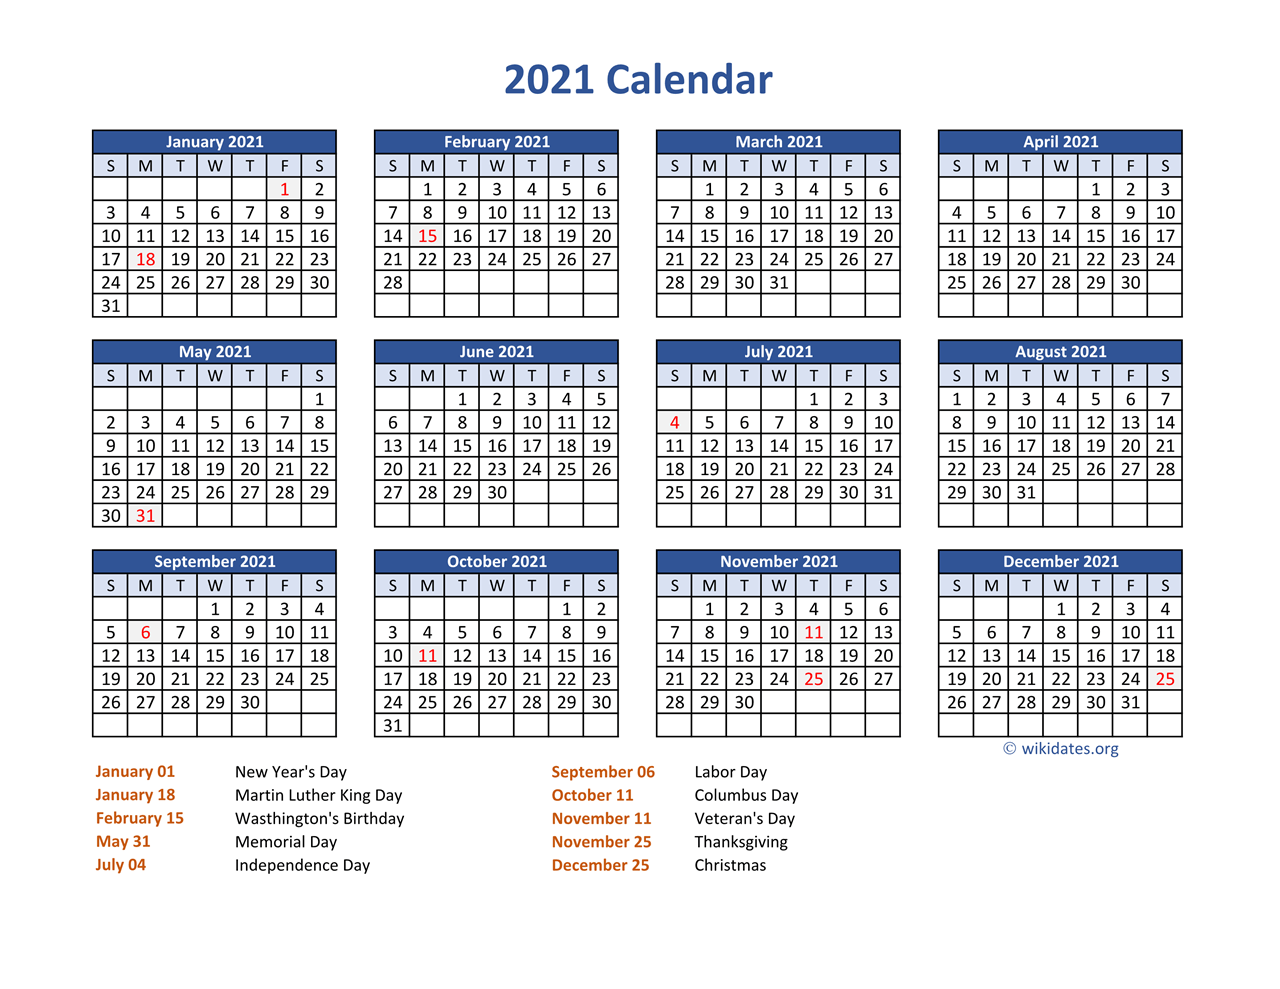 Pdf Calendar 2021 With Federal Holidays Wikidates Org